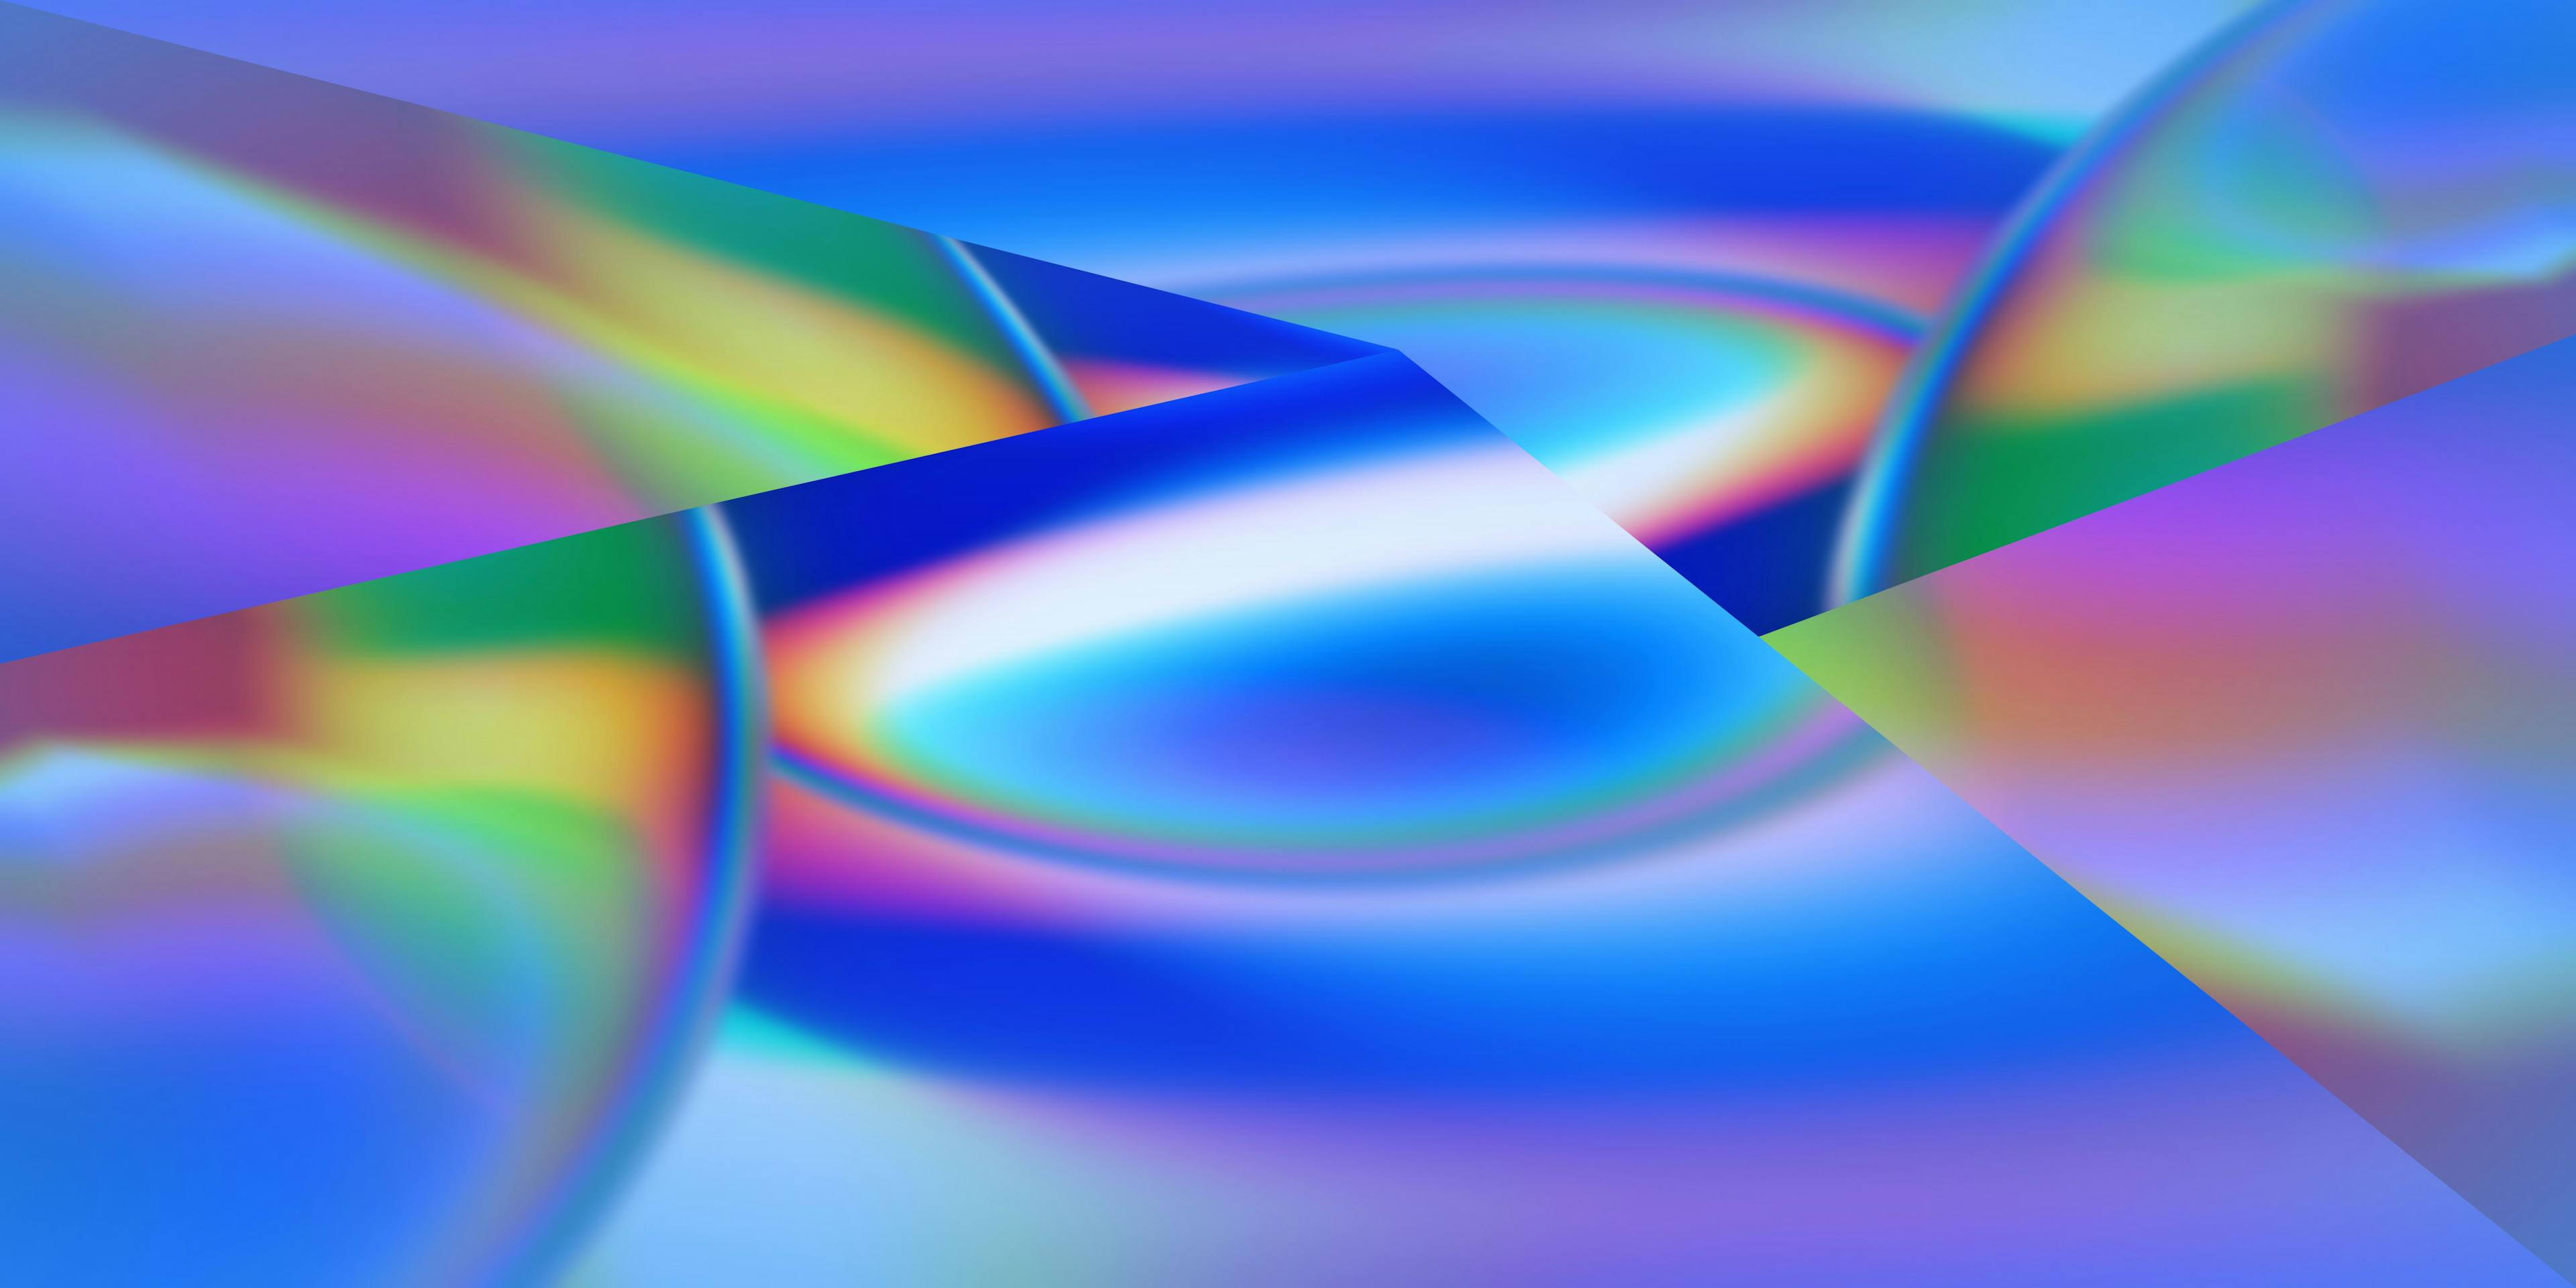 prisms reflecting spectral light